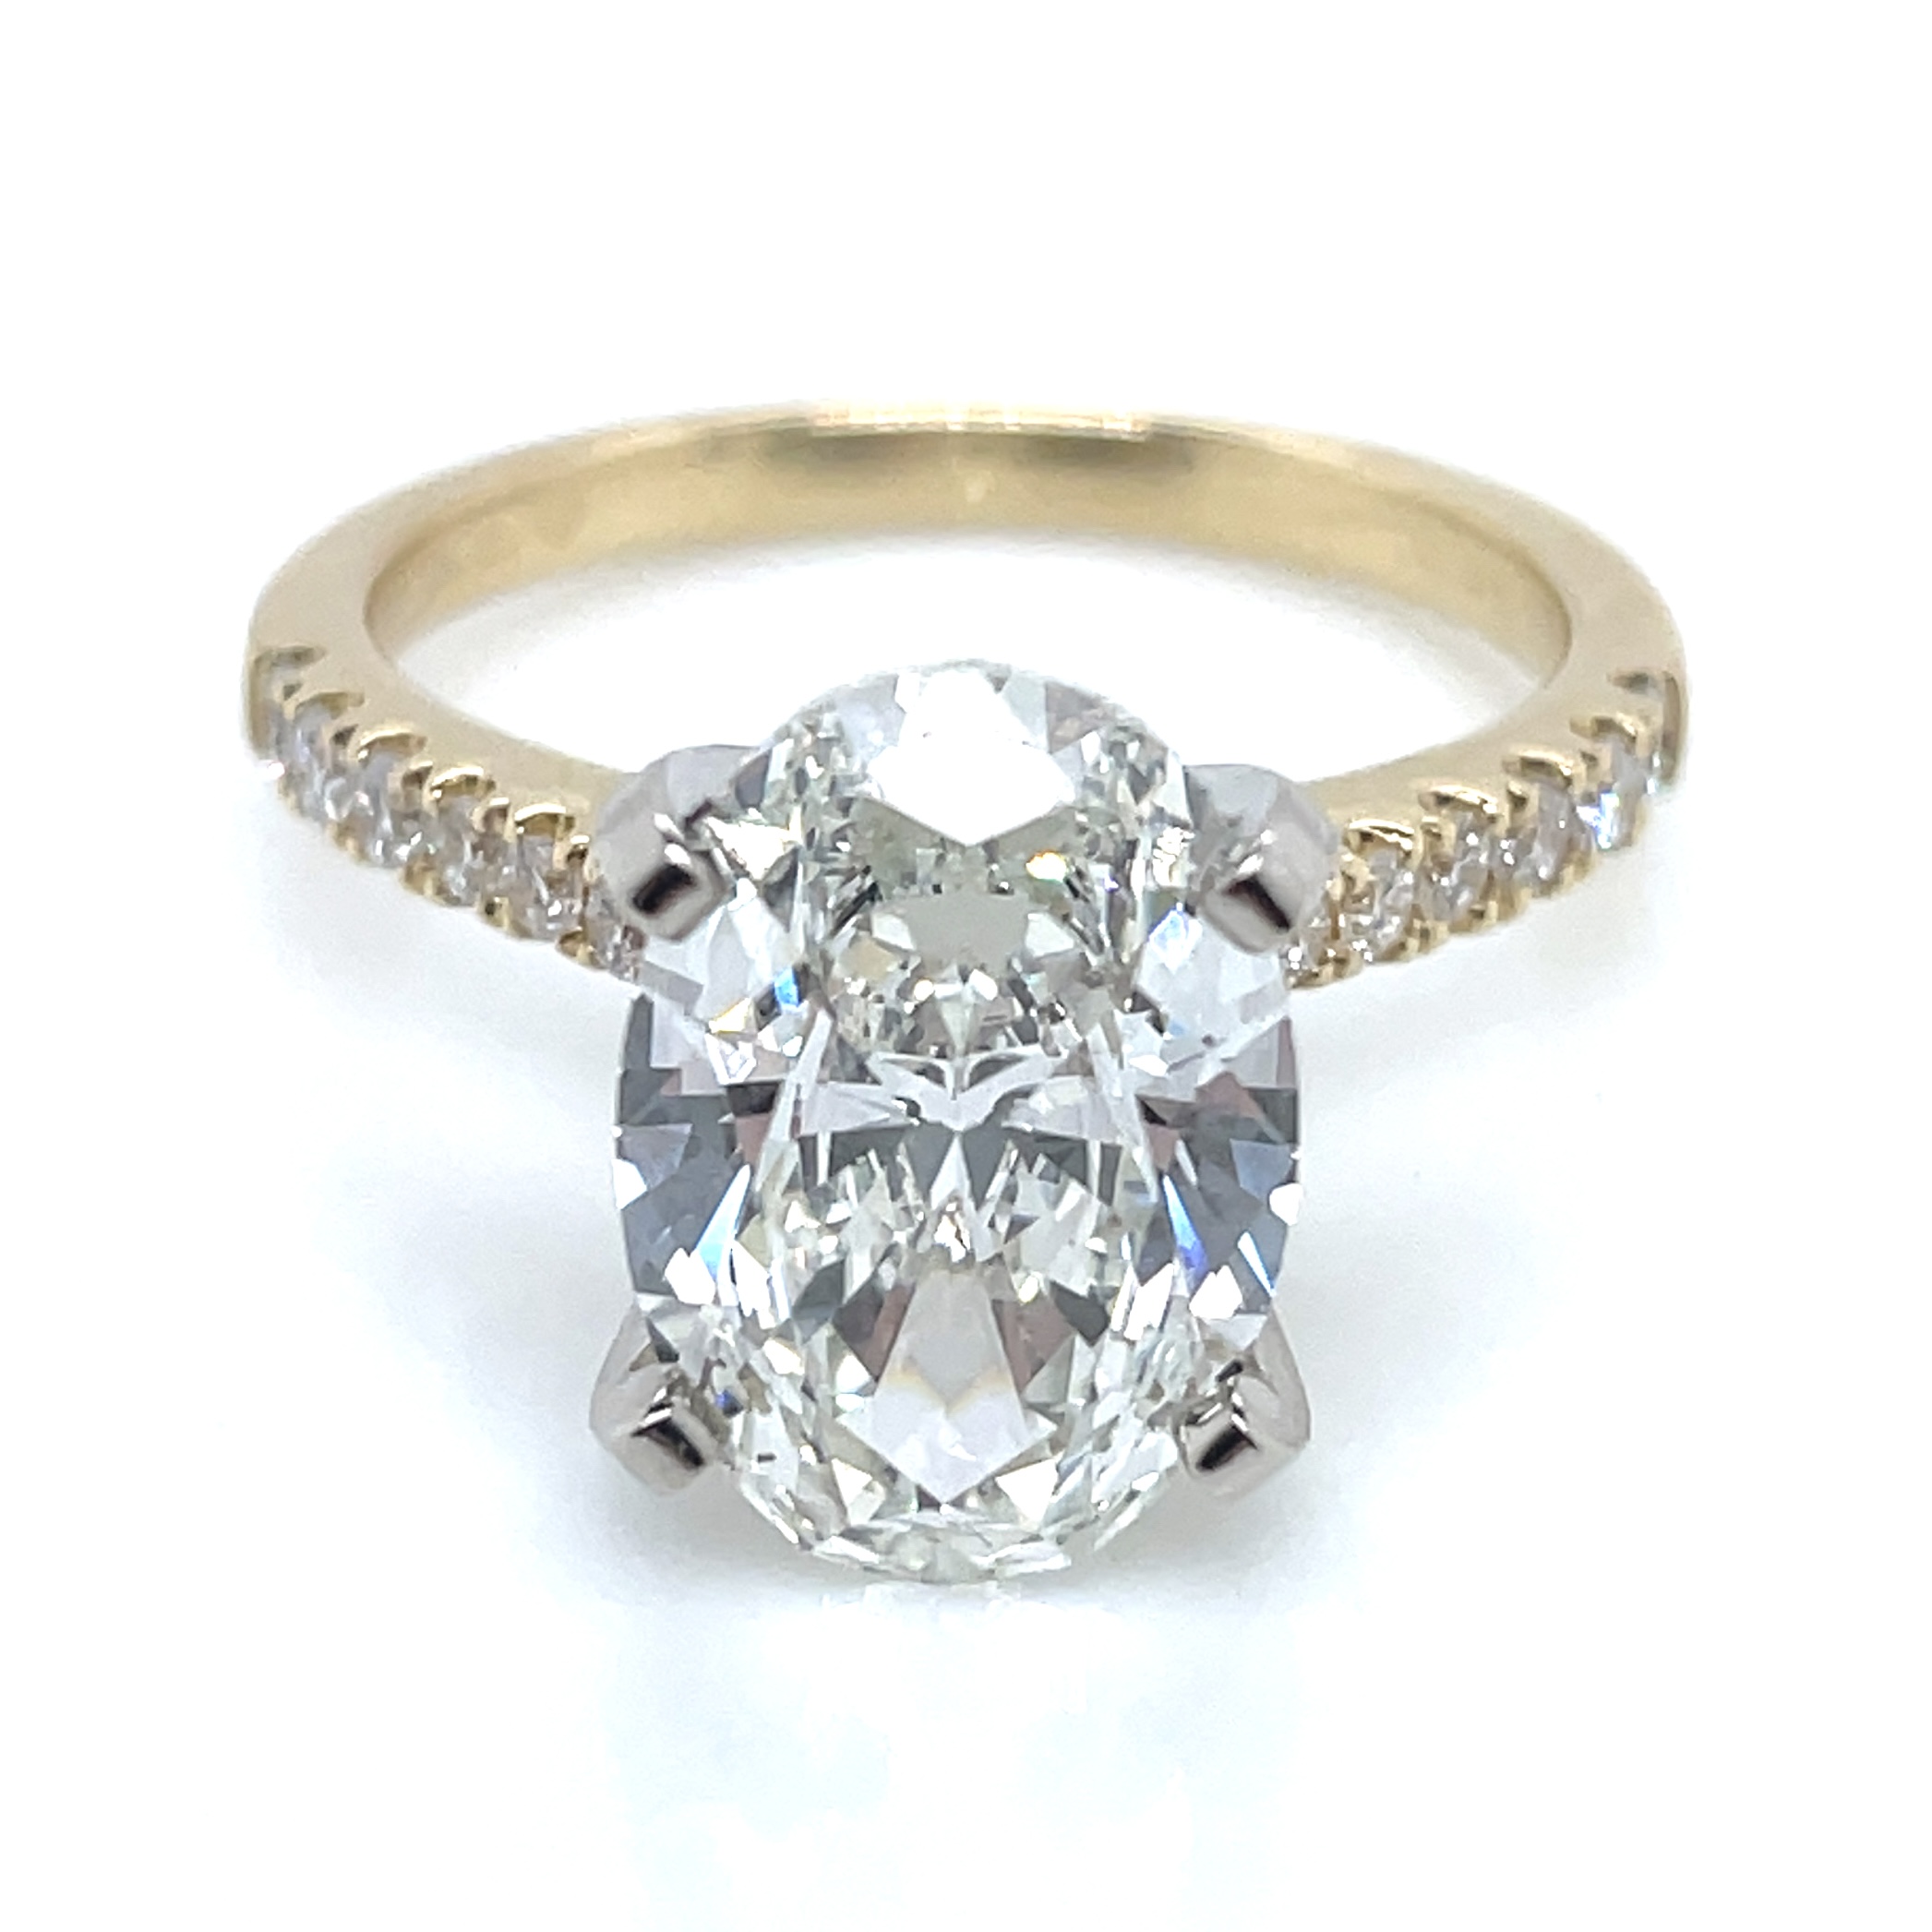 1.5 carat rectangle diamond ring